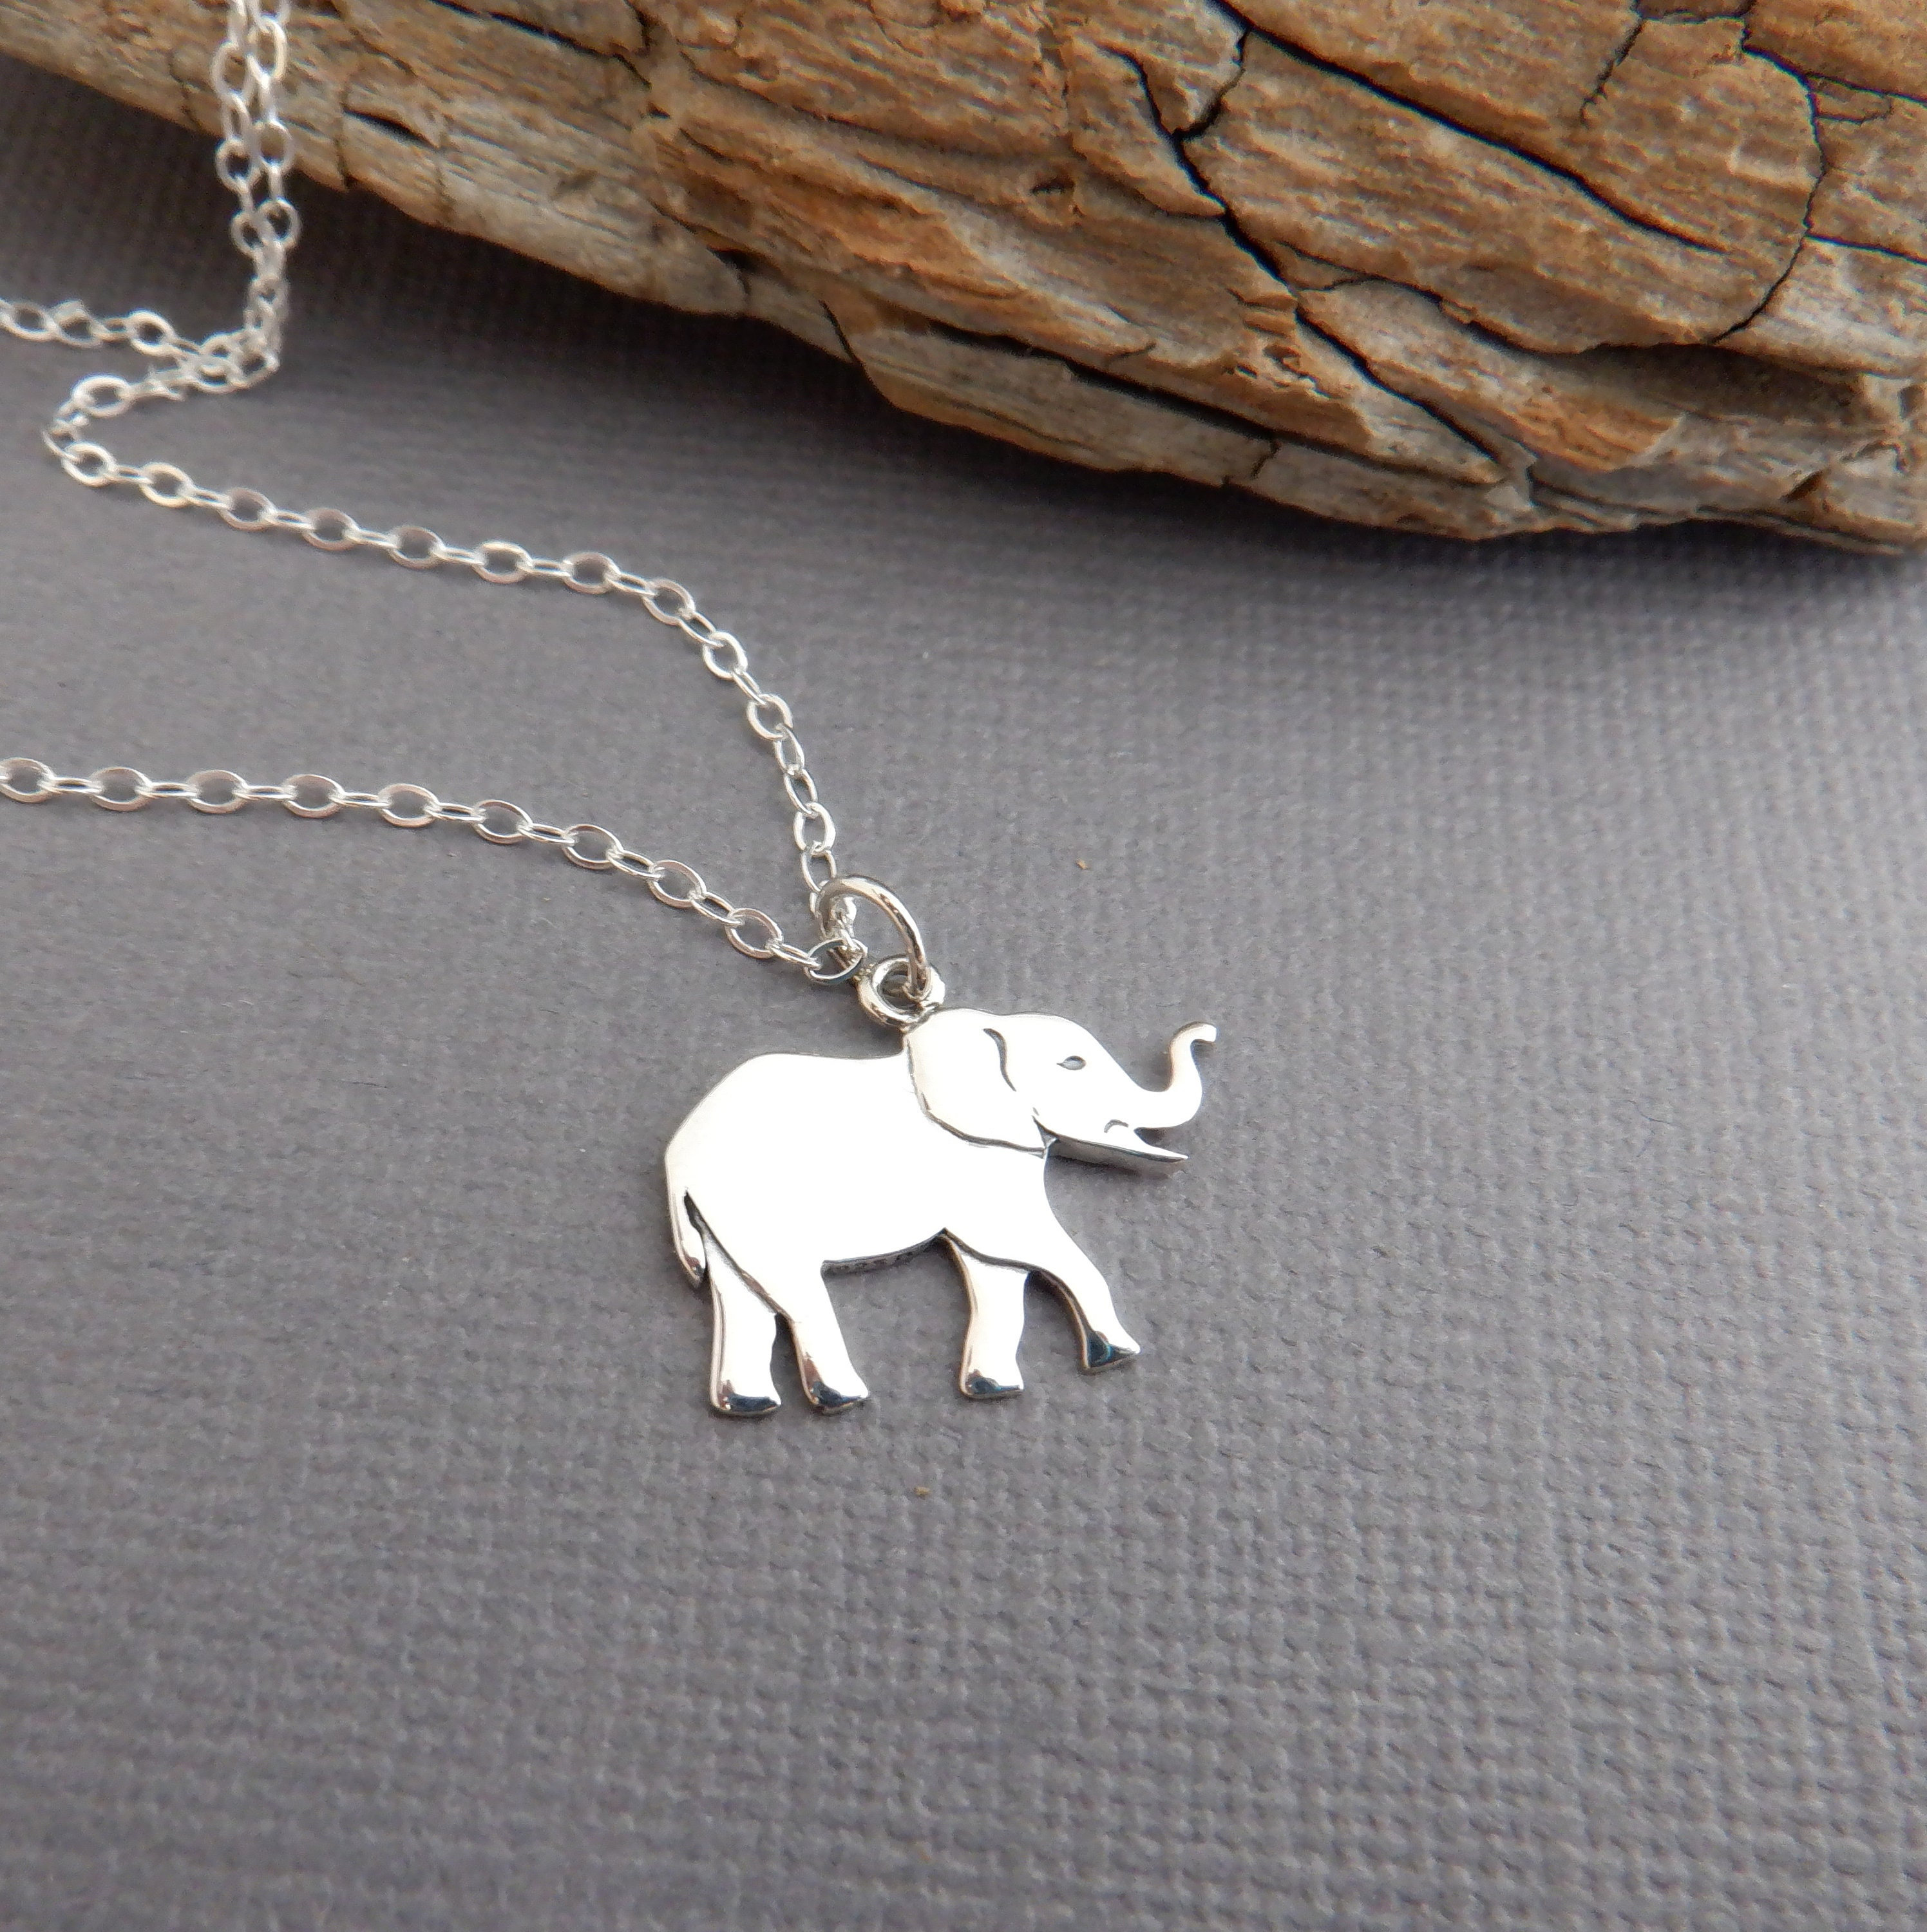 Antique Silver Plt Ornate Elephant Disc Pendant Necklace Ladies Gift Animal Wild 